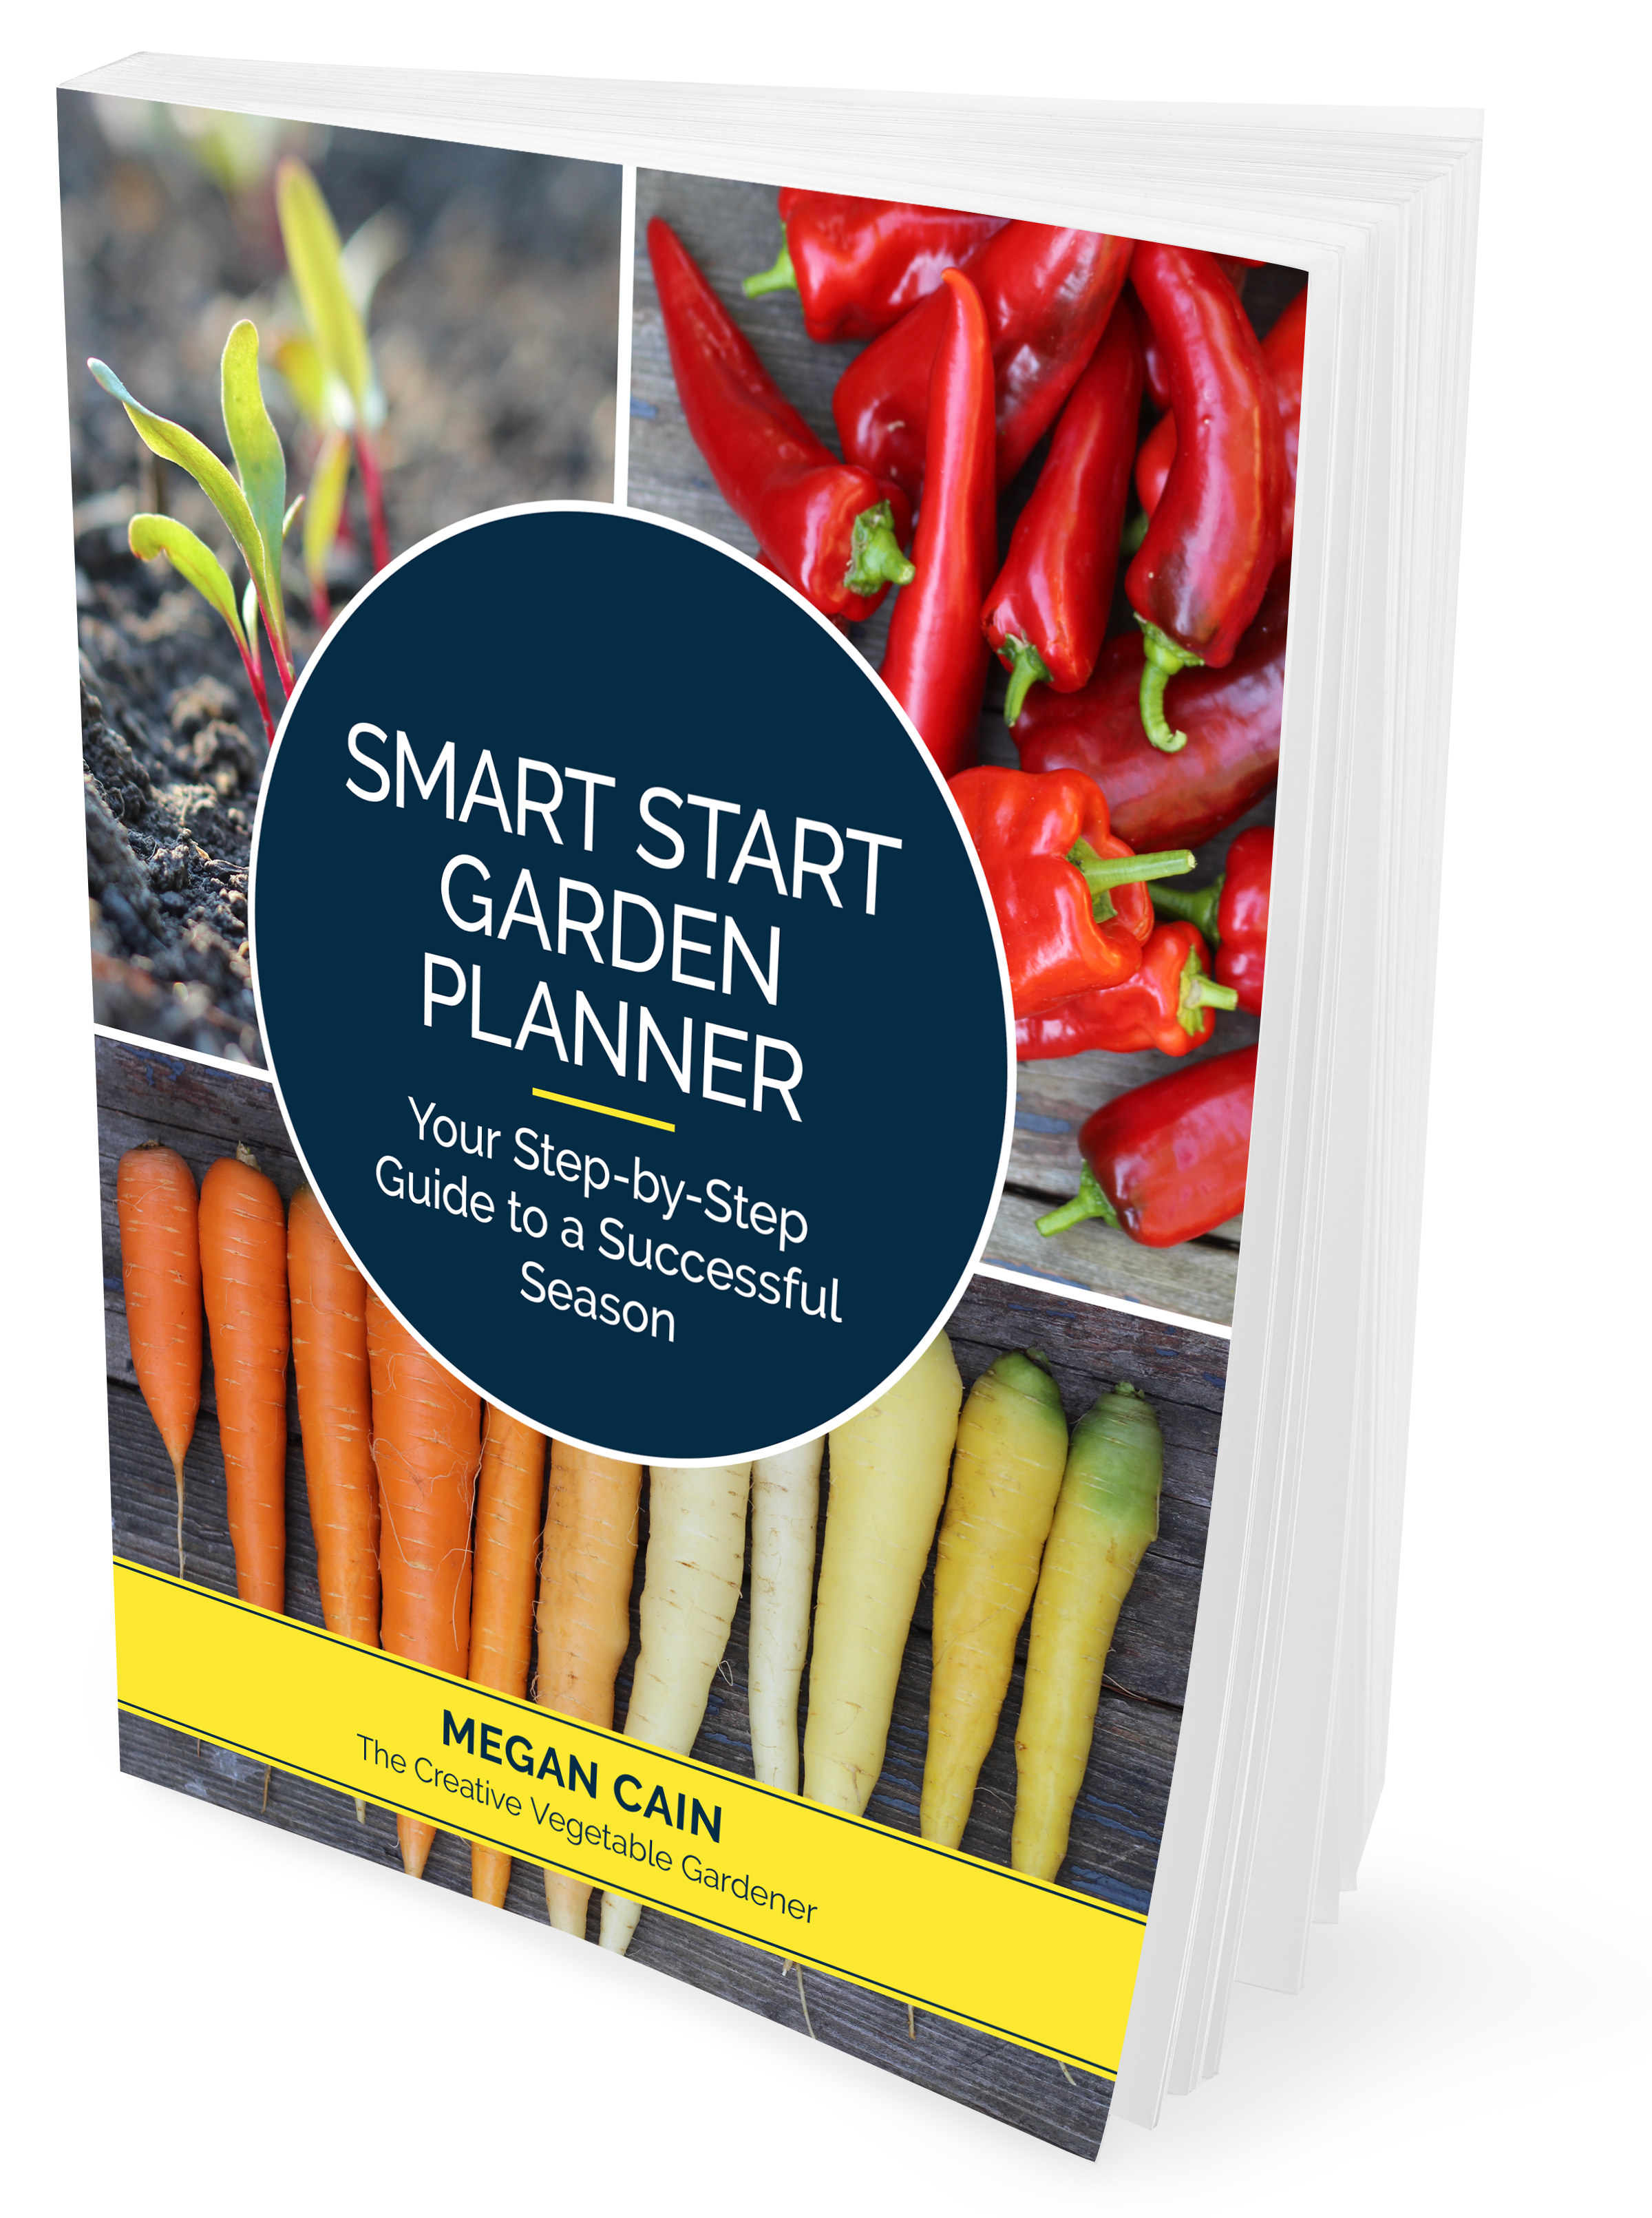  Smart Start Garden Planner